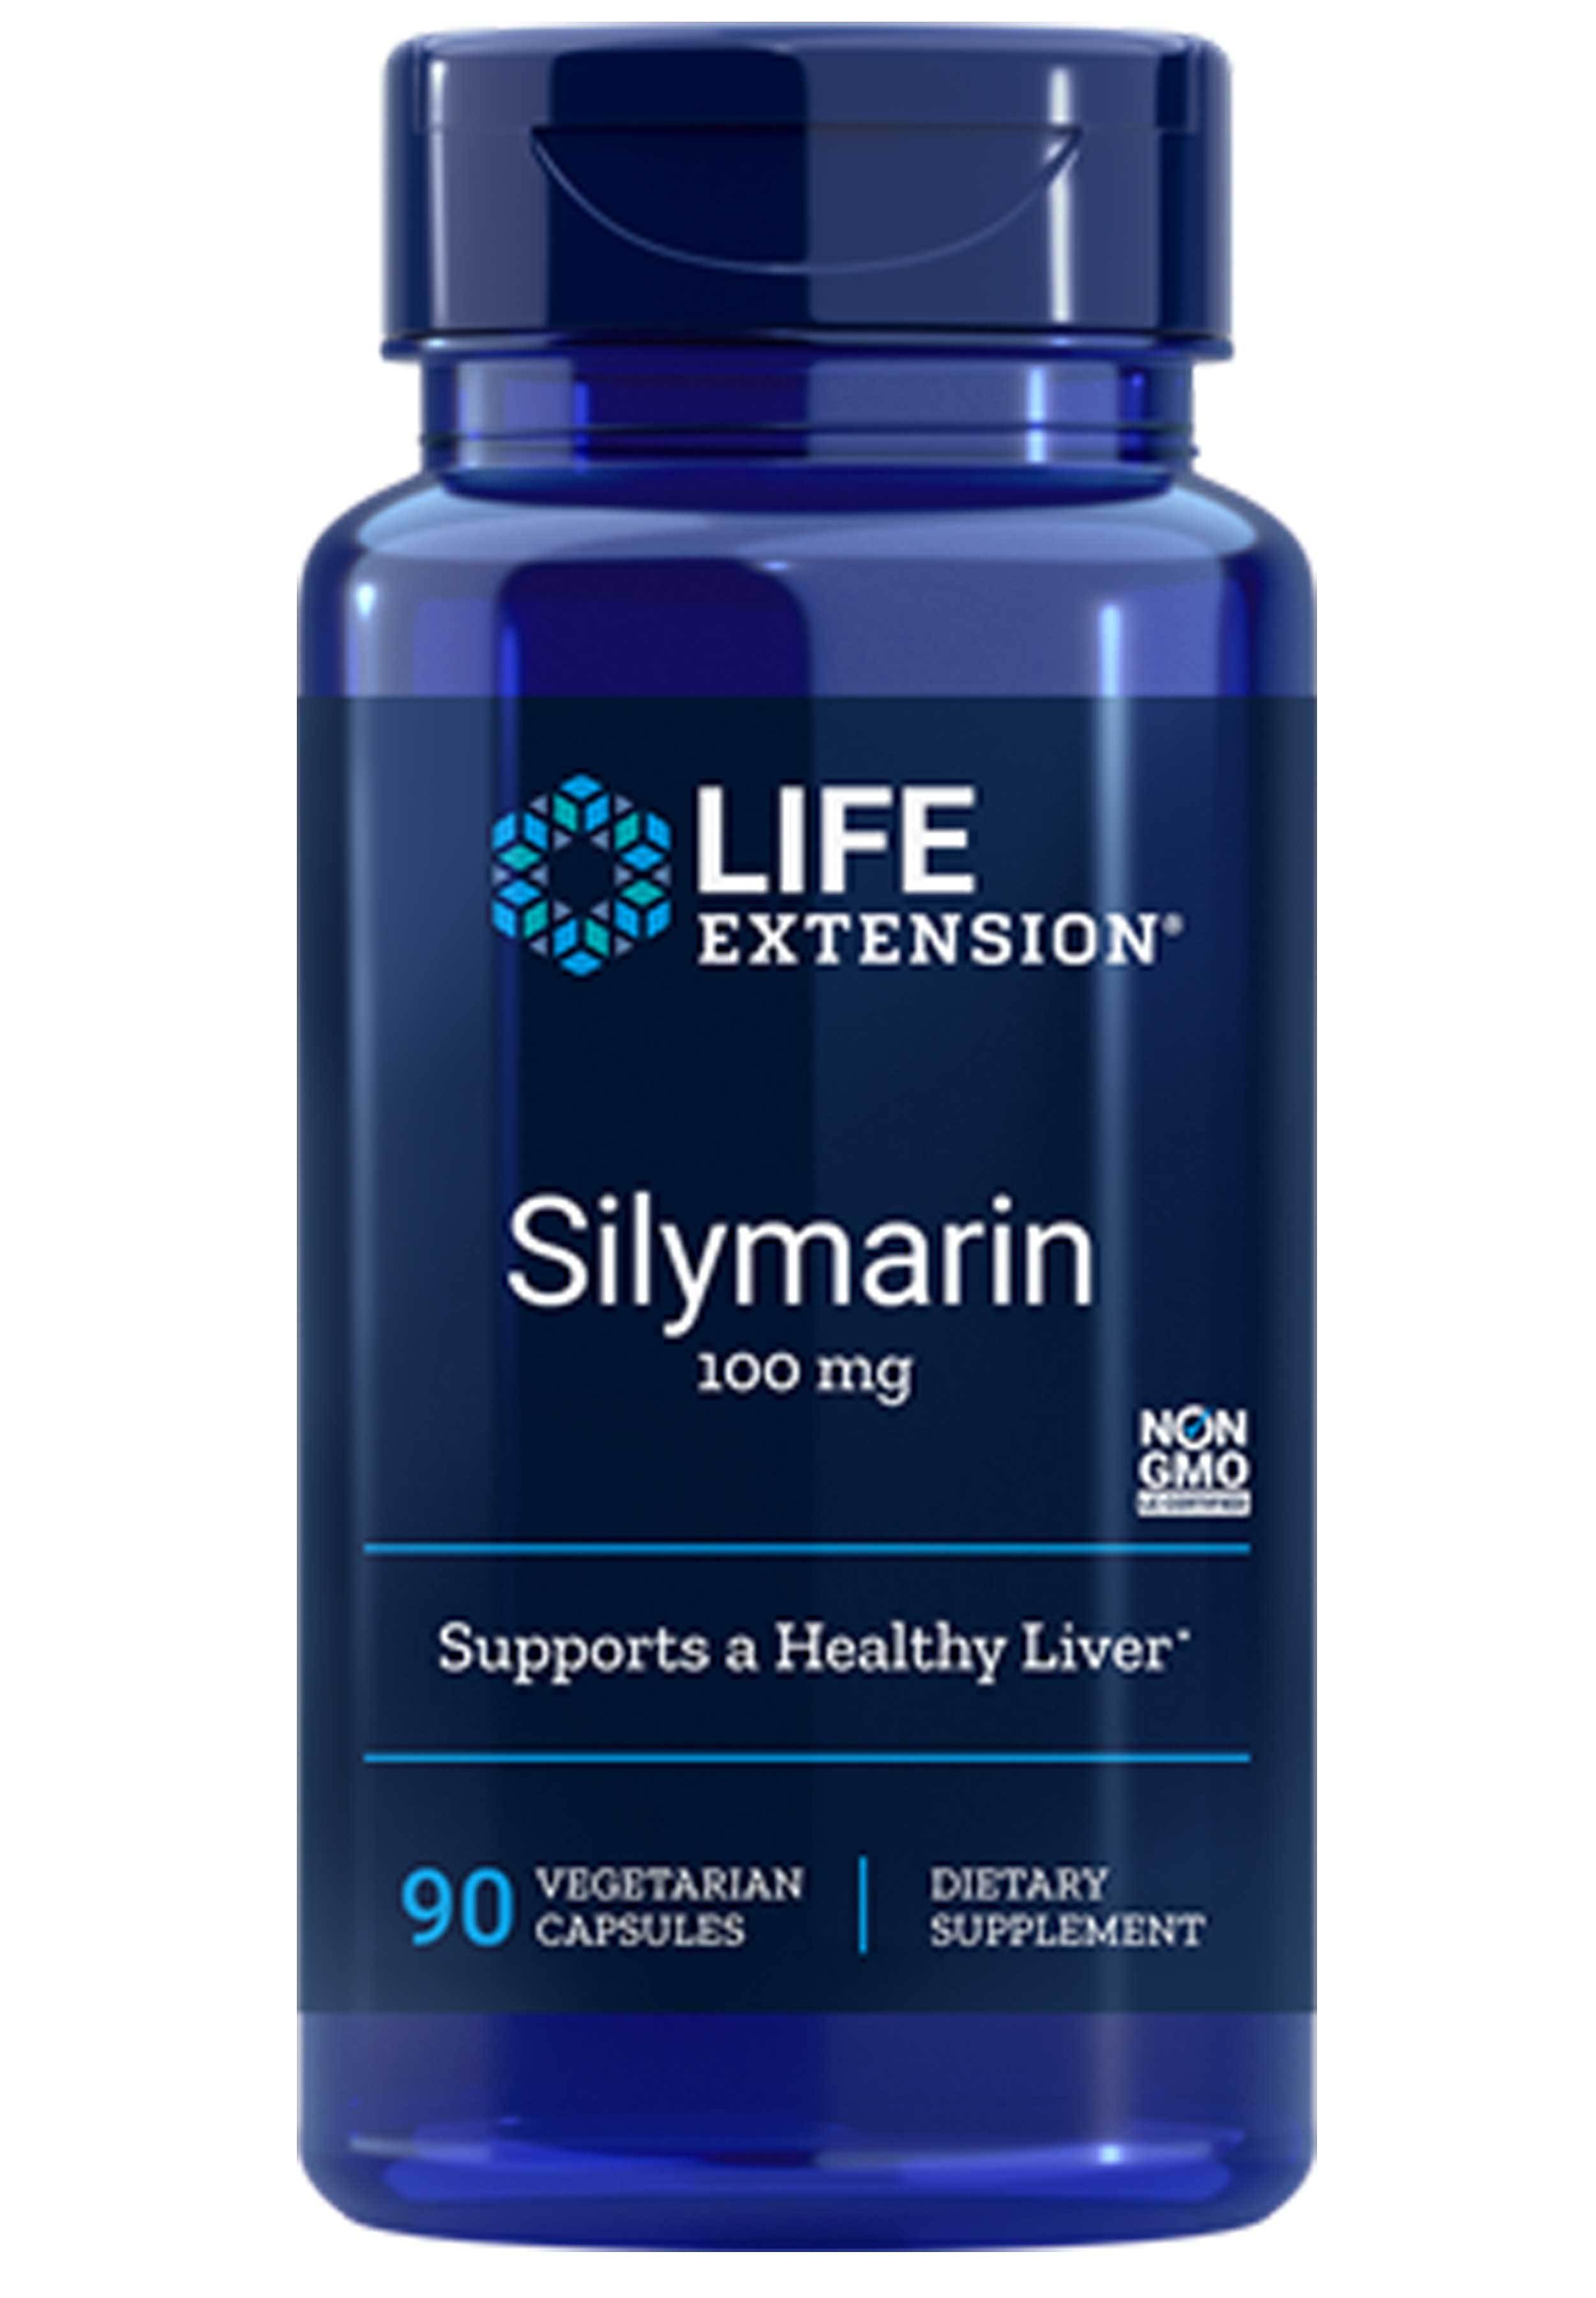 Life Extension Silymarin